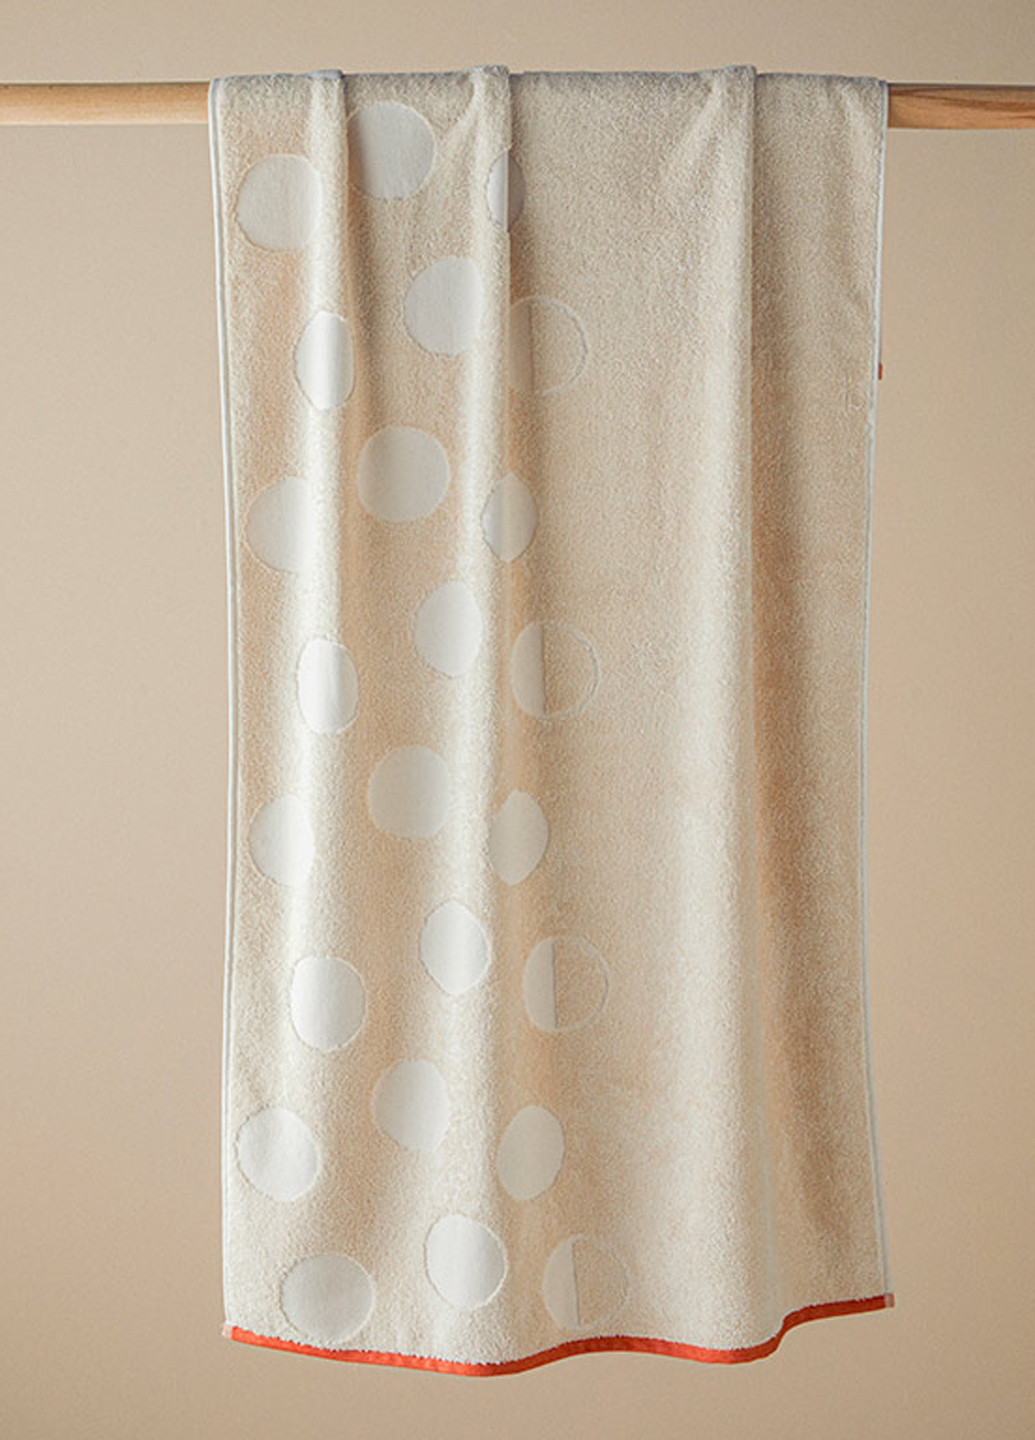 English Home полотенце, 70х140 см однотонный бежевый производство - Турция